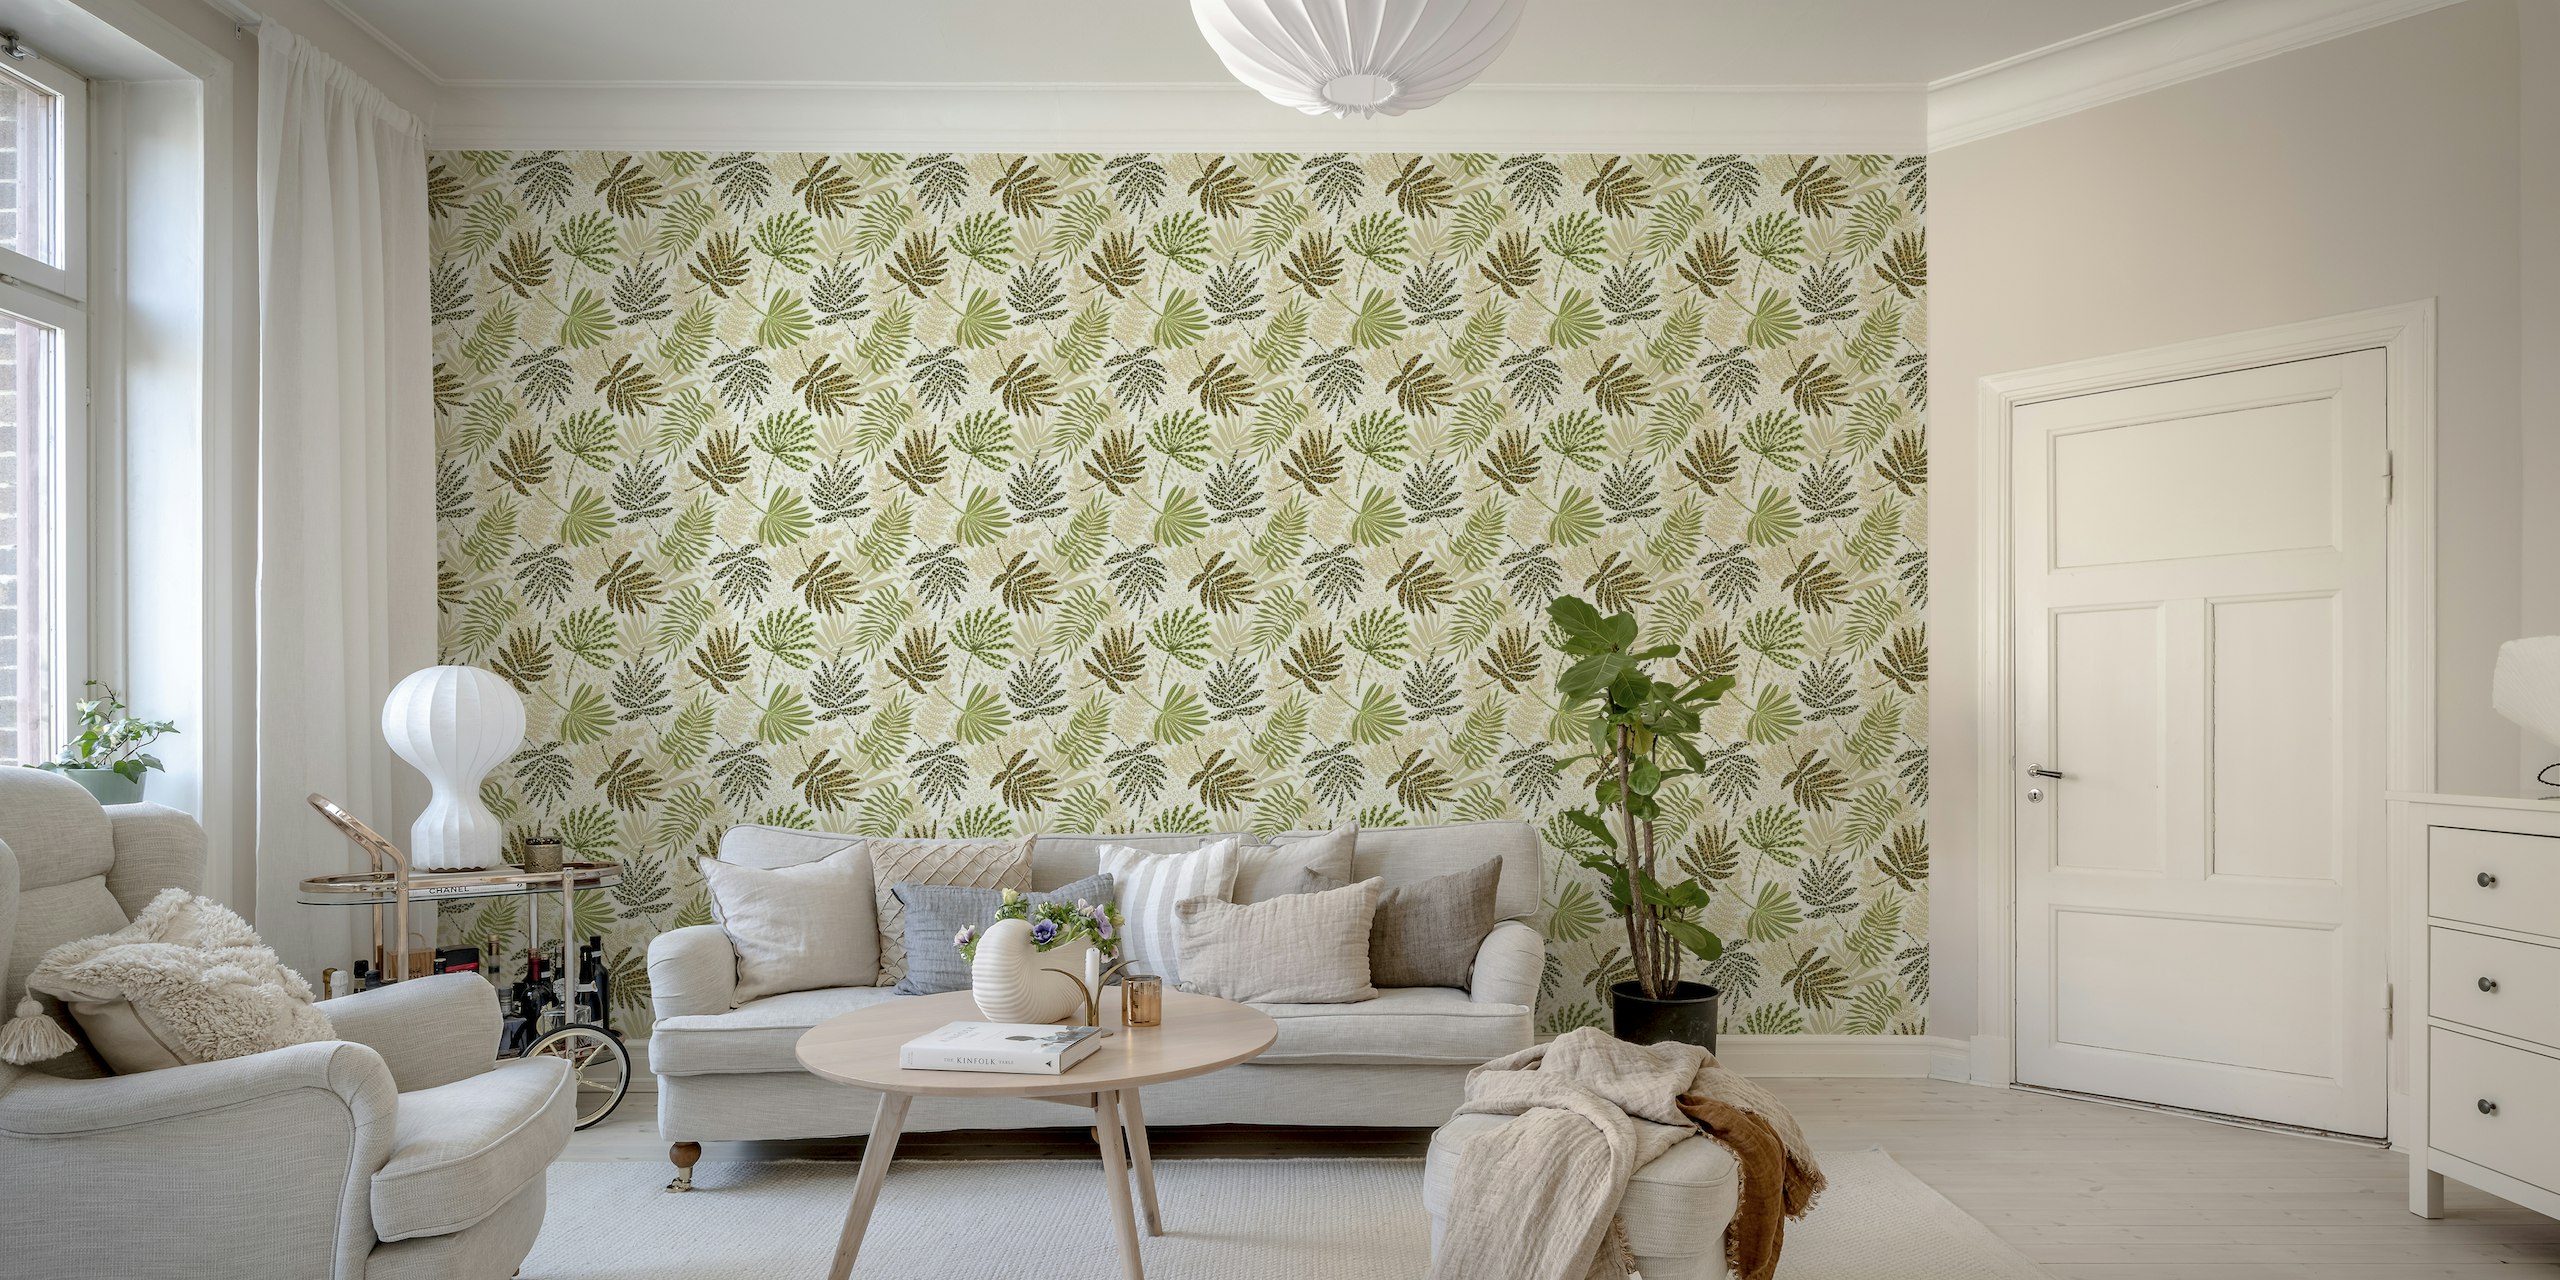 Animal printed palm leaves - smaller wallpaper